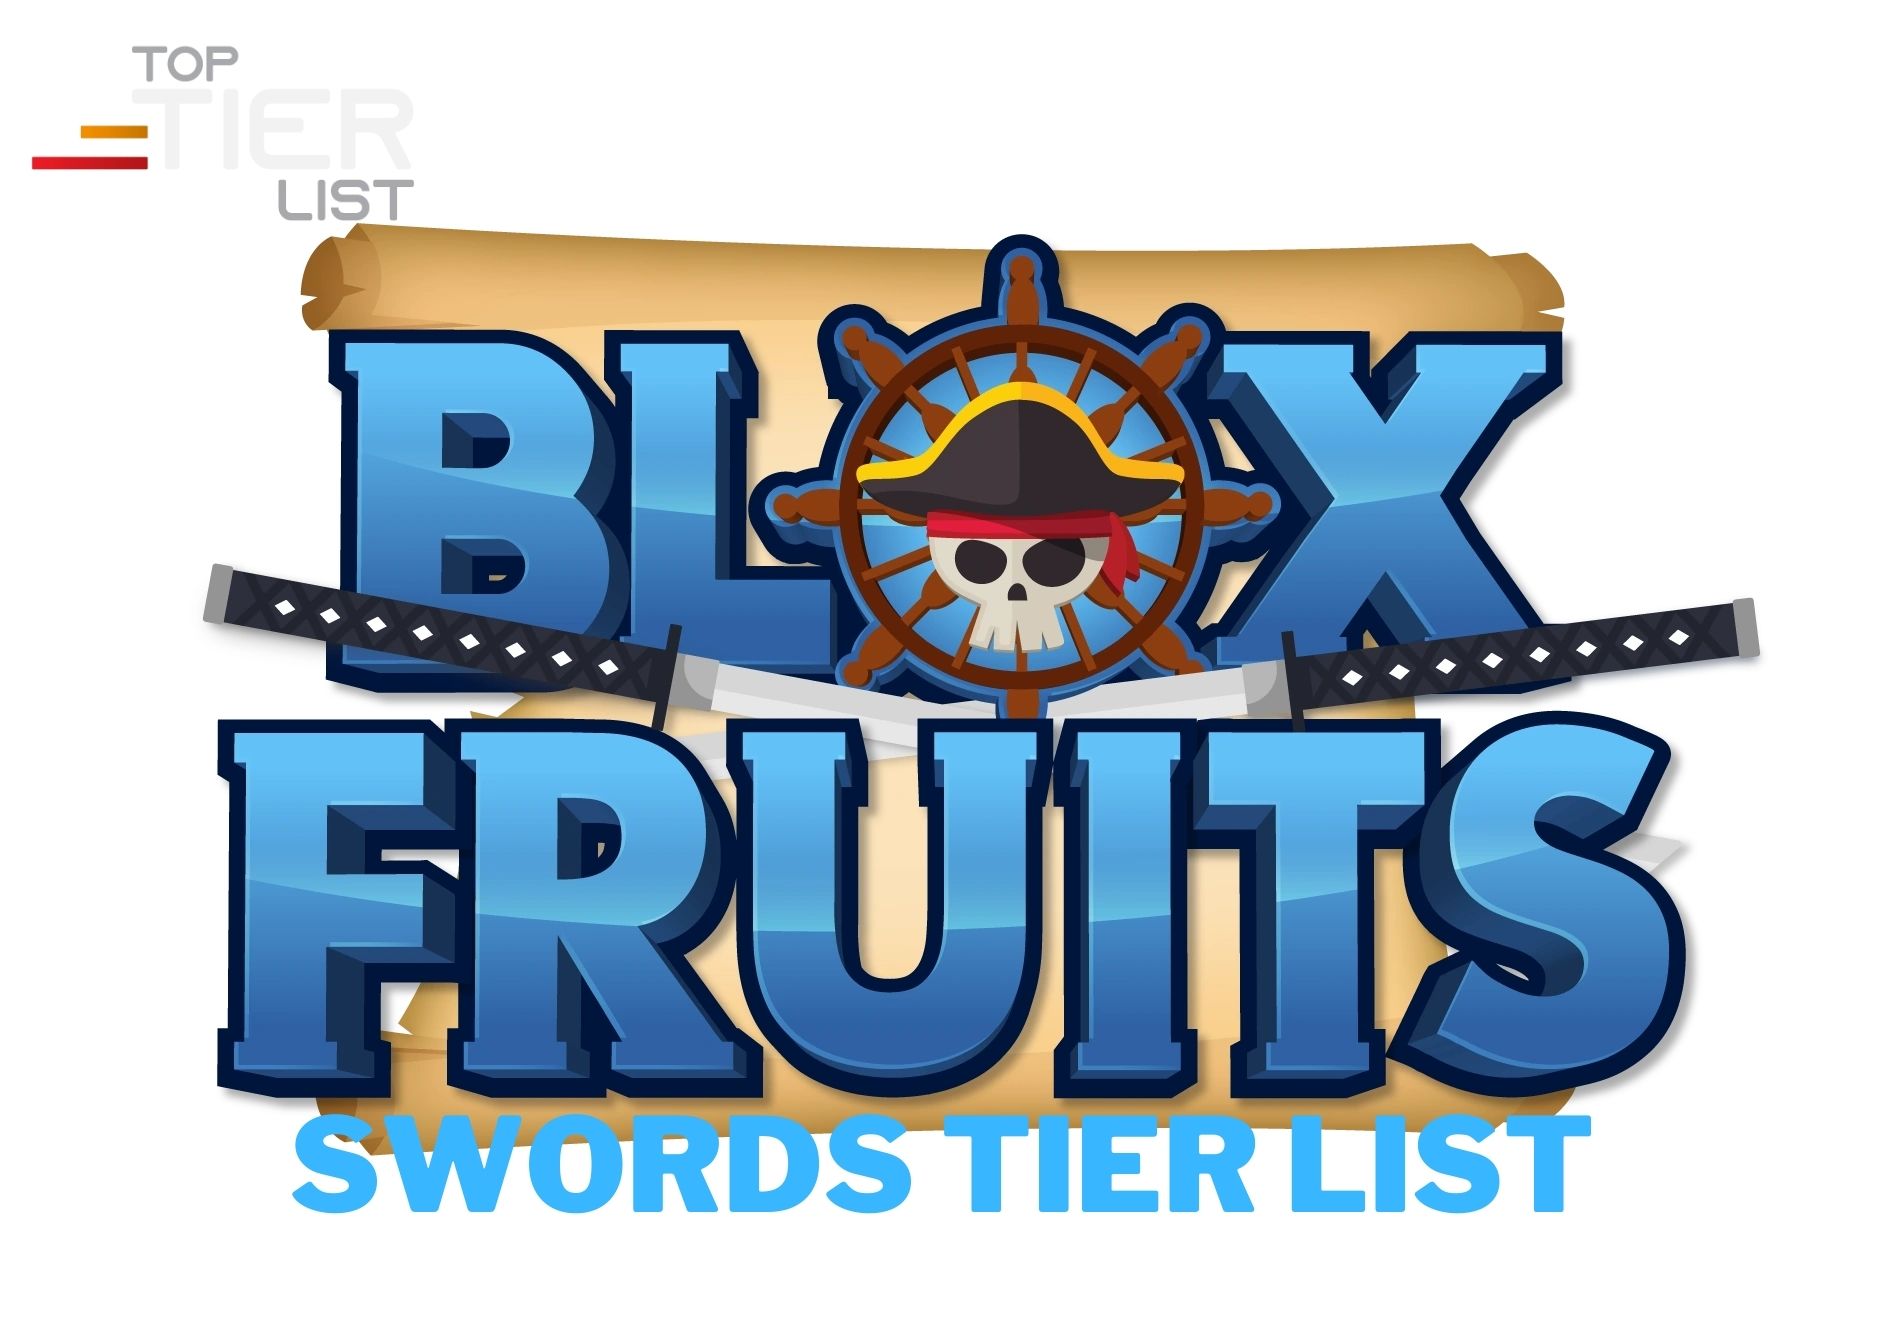 Blox Fruits - Rengoku Combos (Easy to Hard Combos) (Update 13)